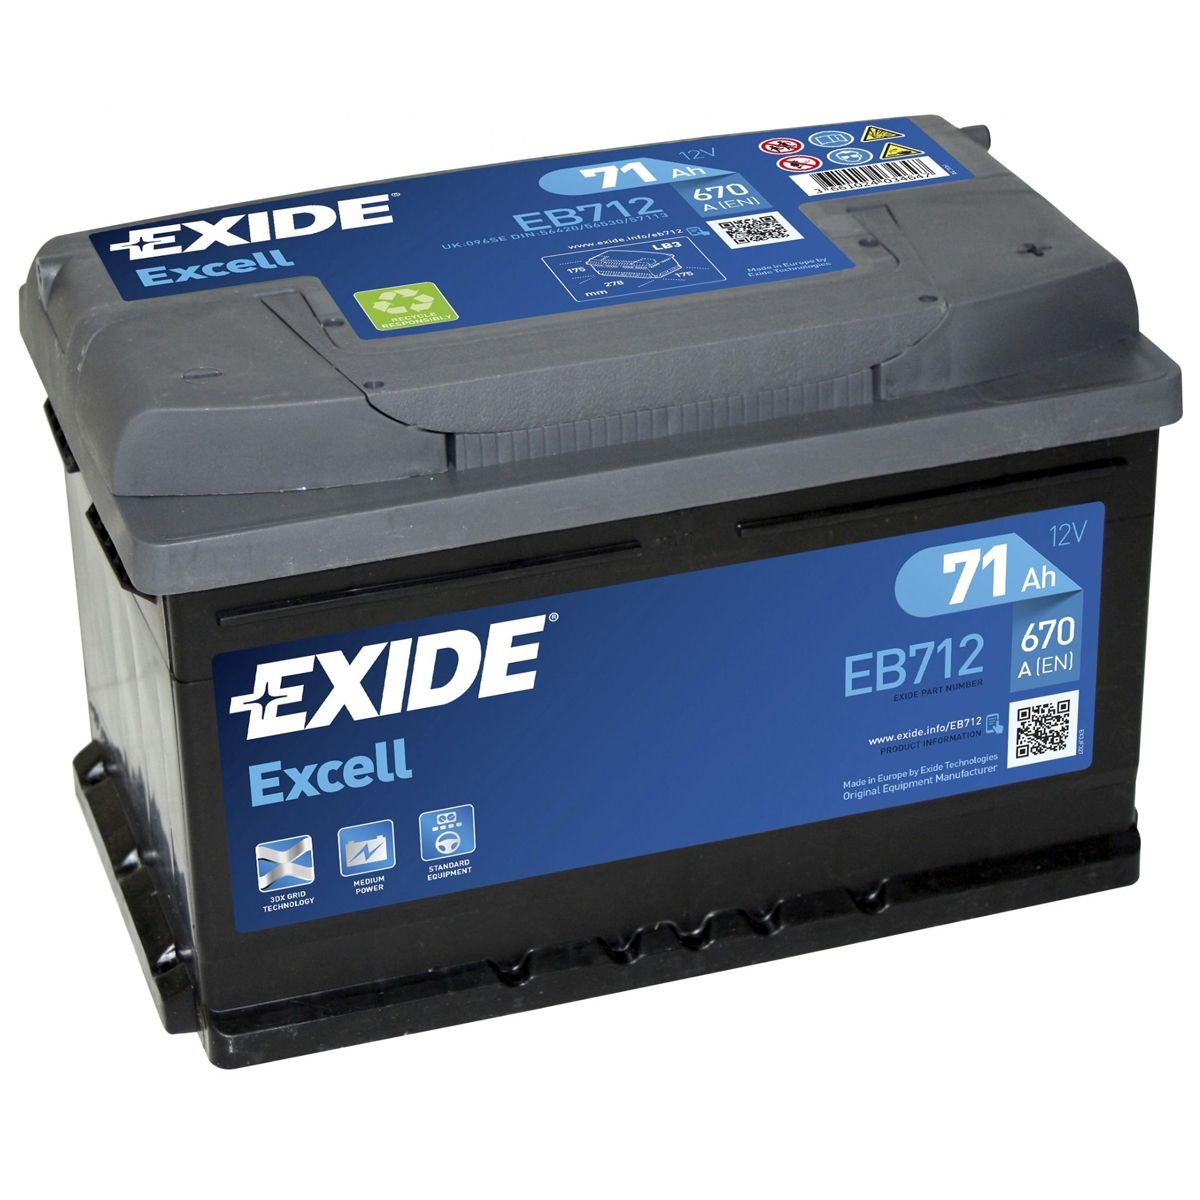 096se Exide Excell Car Battery Eb712 Exide Car Batteries